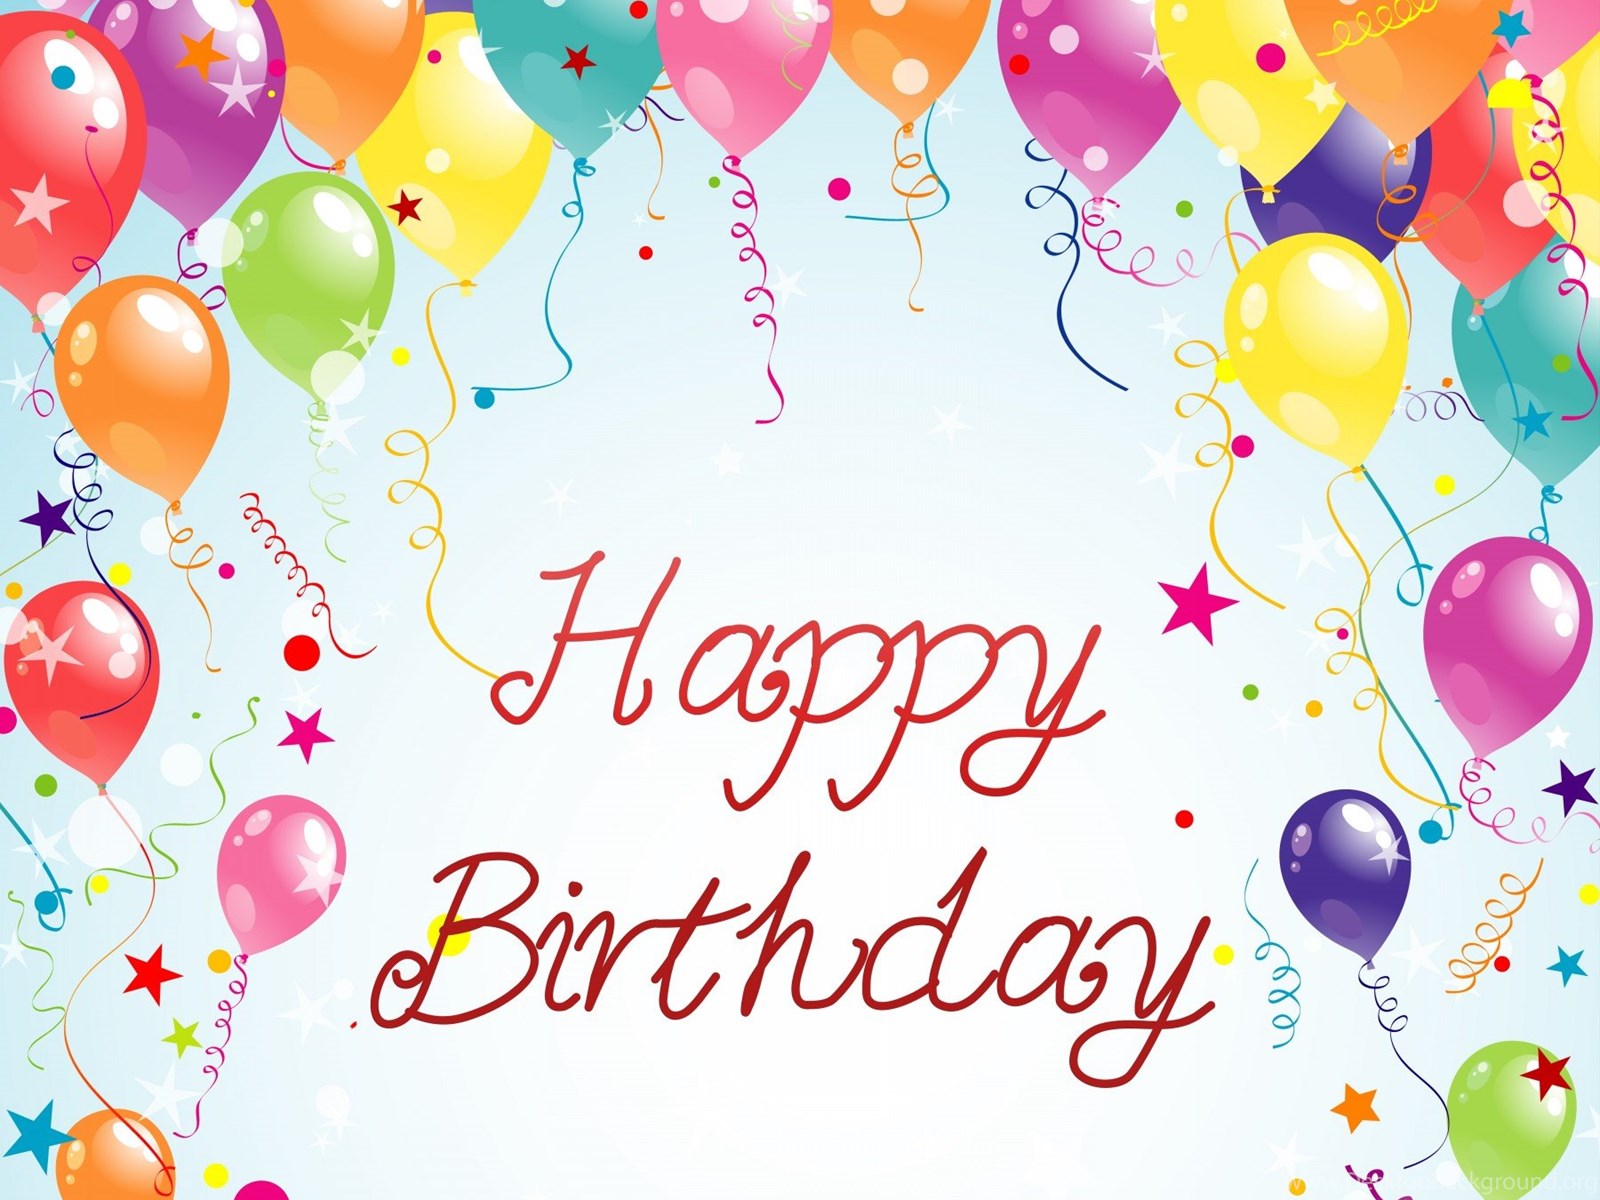 Download Images Of Beautiful Birthday Cards Fullscreen Standart 4:3 1600x12...